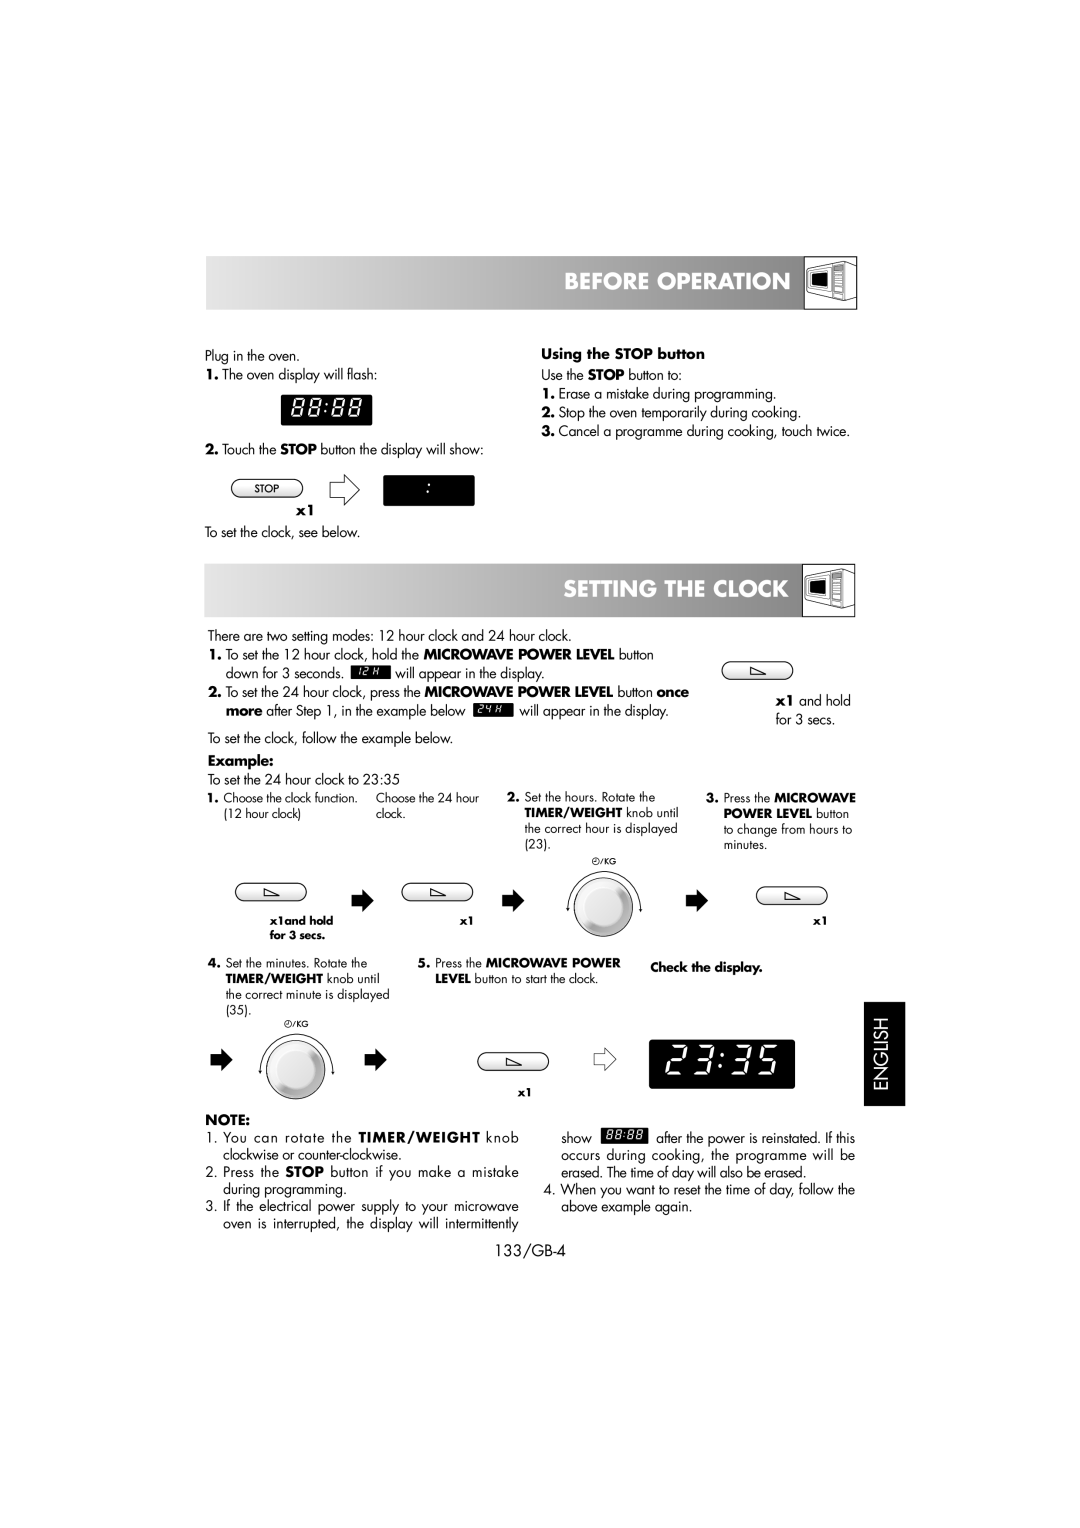 Sharp R-239 operation manual Before Operation, Setting The Clock, English, 133/GB-4 